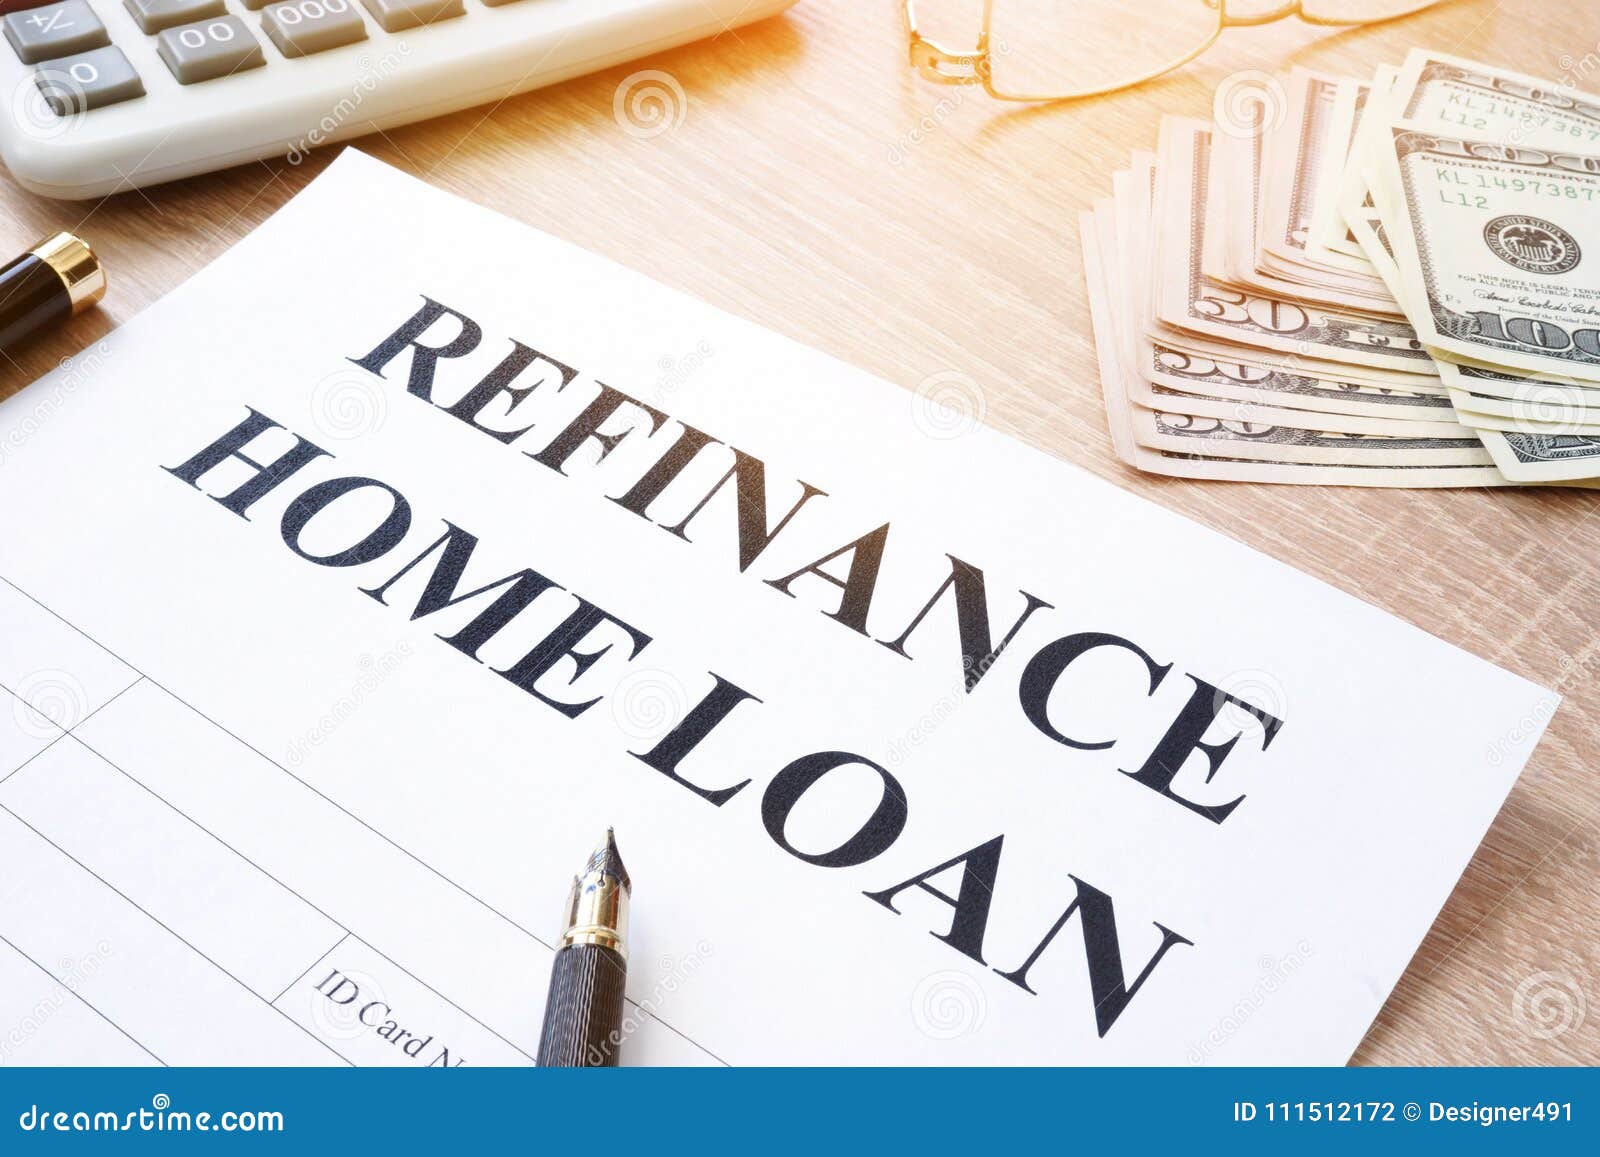 refinance home loan application.